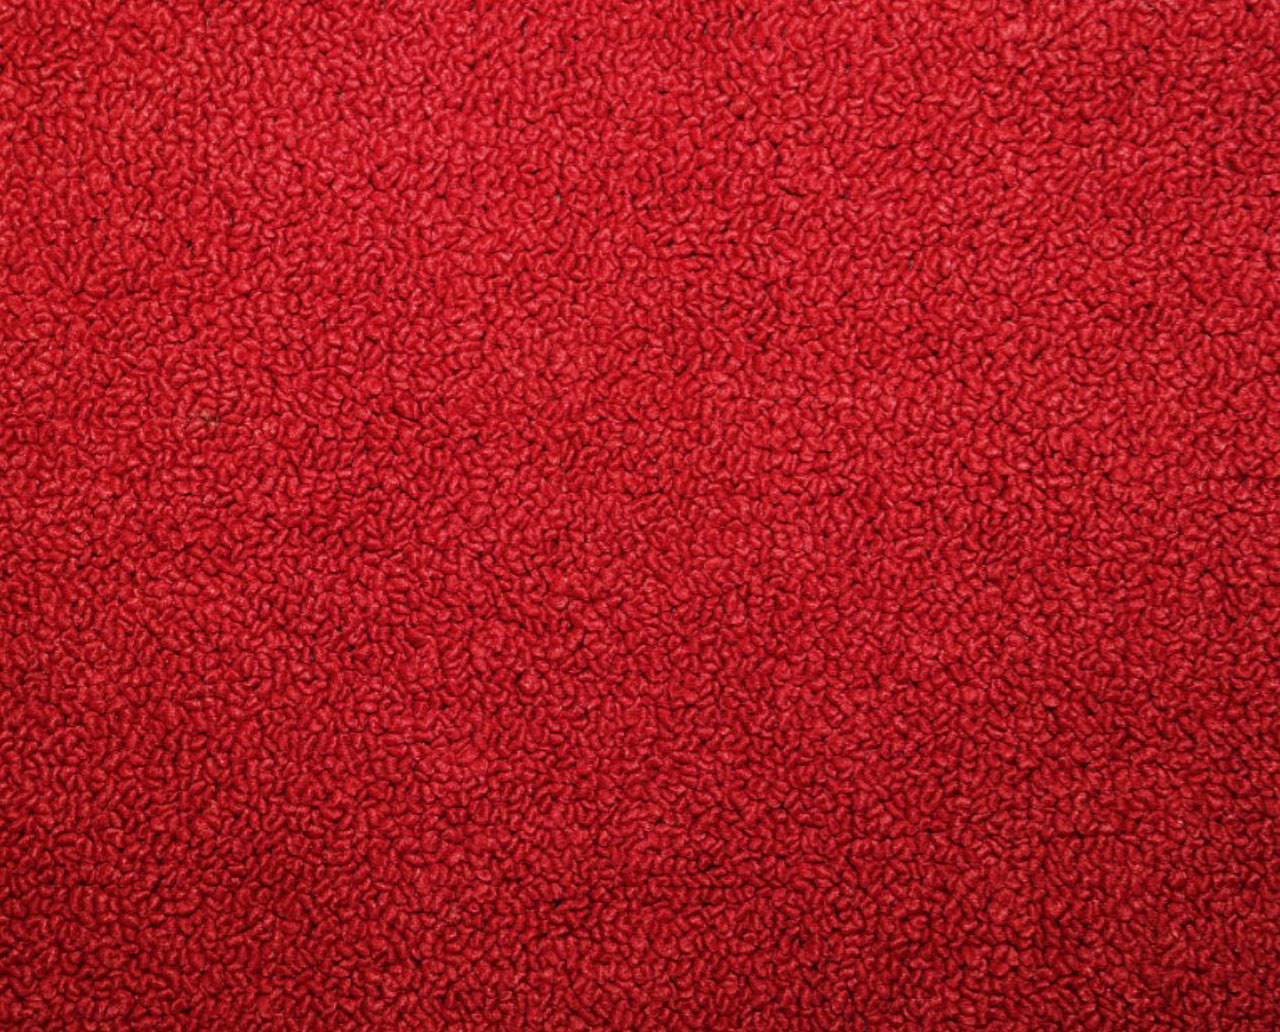 Holden Standard HD Standard Wagon E21 Mephisto Red Carpet (Image 1 of 1)